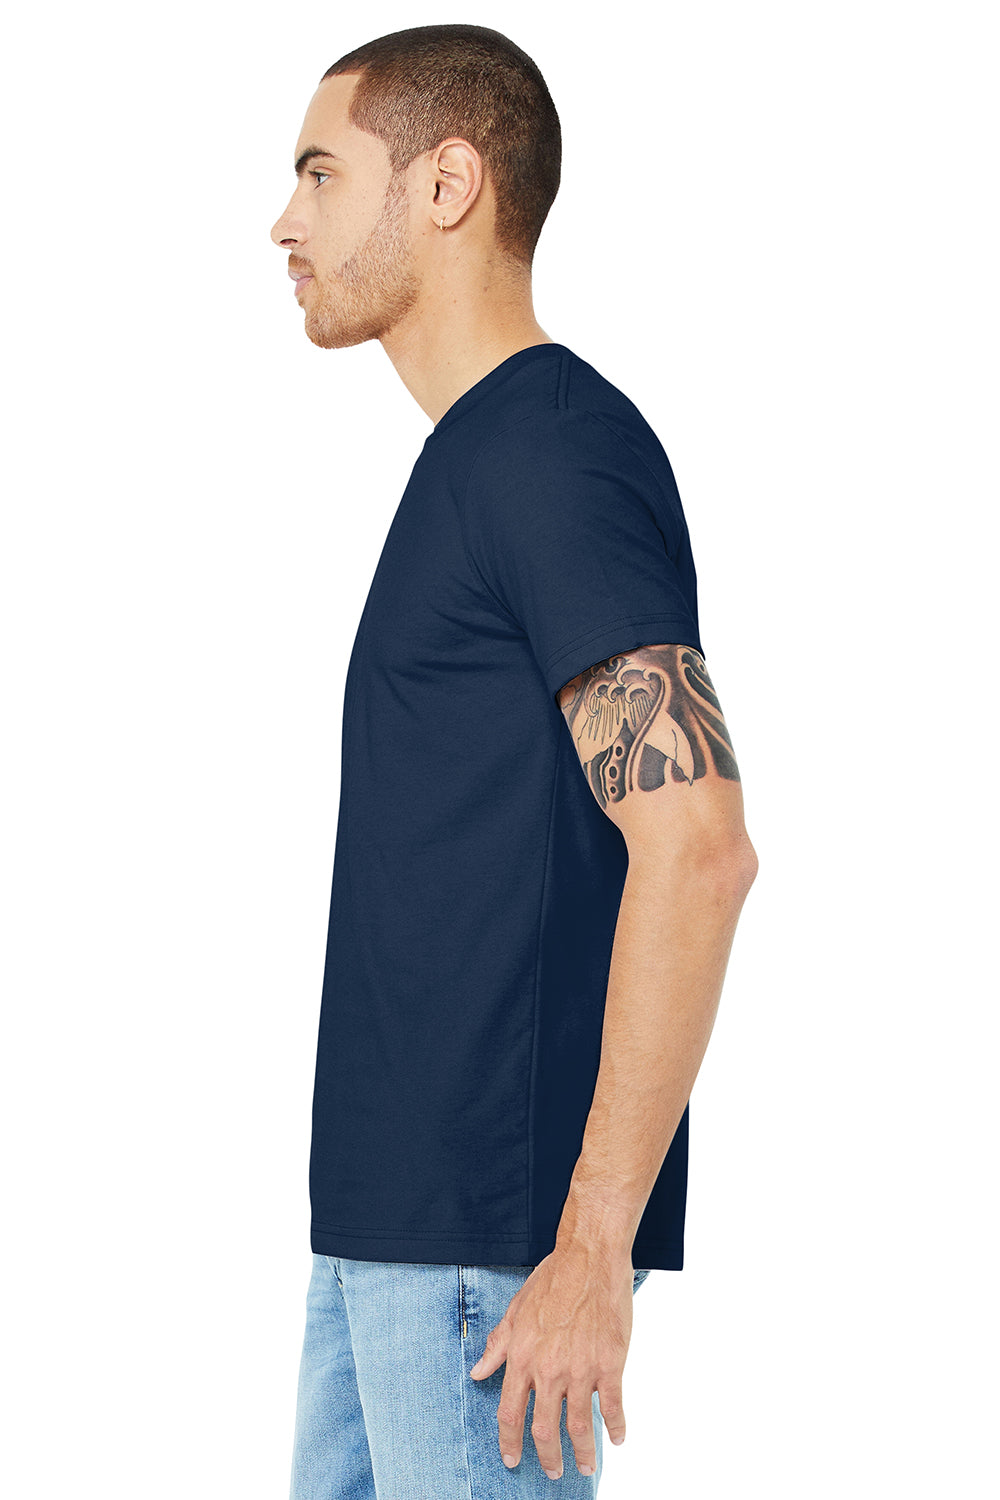 Bella + Canvas BC3001/3001C Mens Jersey Short Sleeve Crewneck T-Shirt Navy Blue Model Side